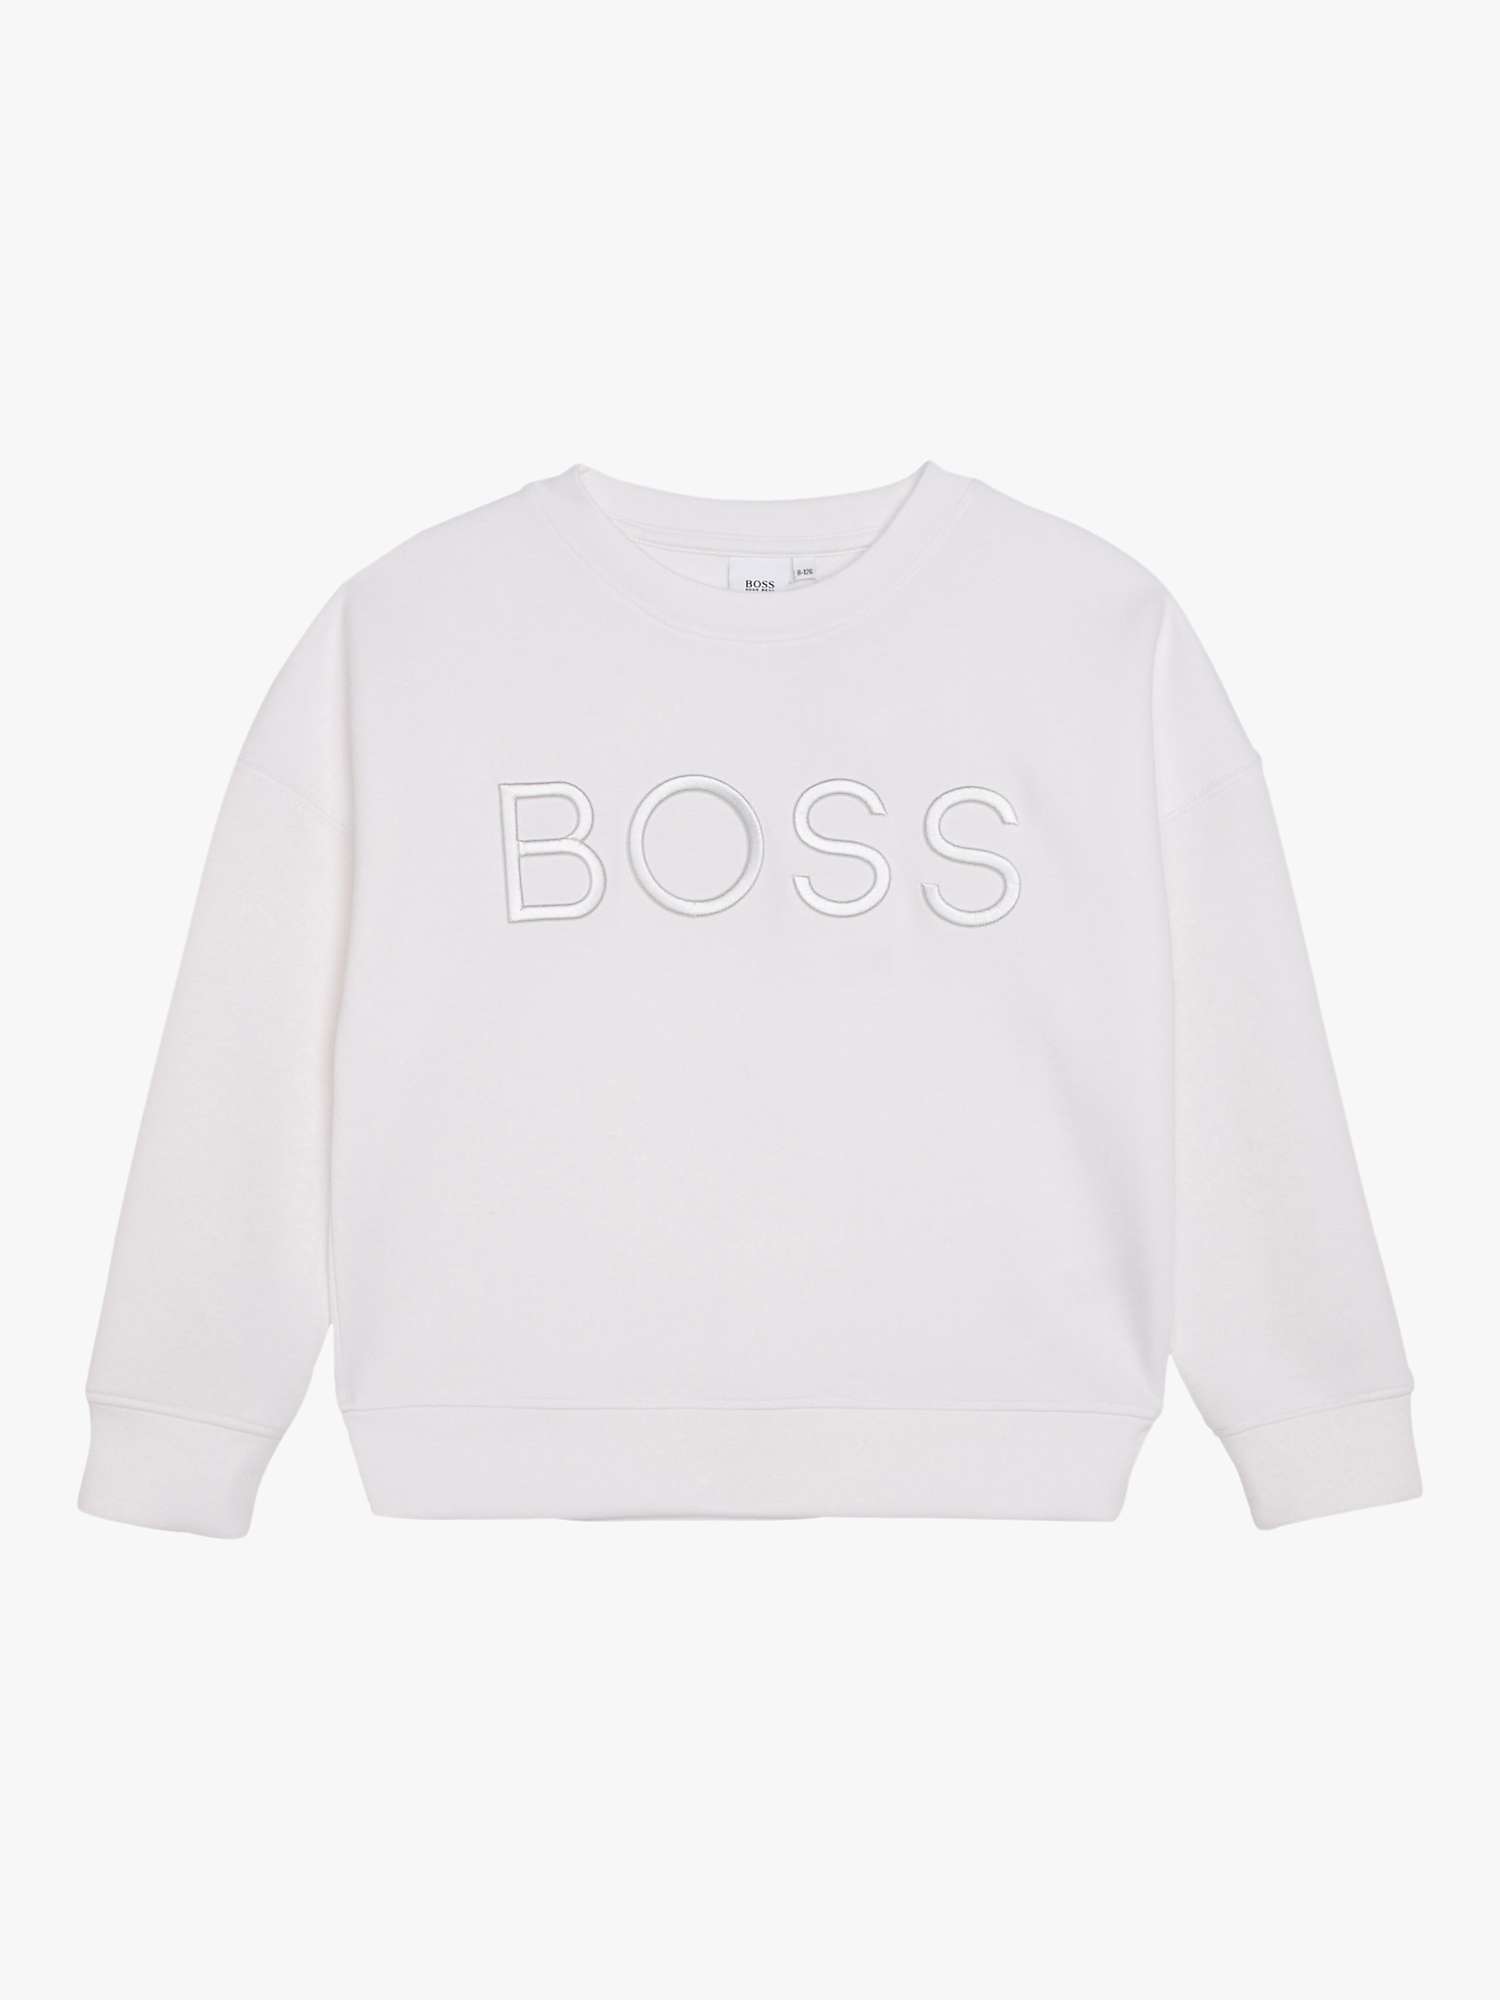 Buy HUGO BOSS Kids' Embroidered Logo Sweatshirt, White Online at johnlewis.com